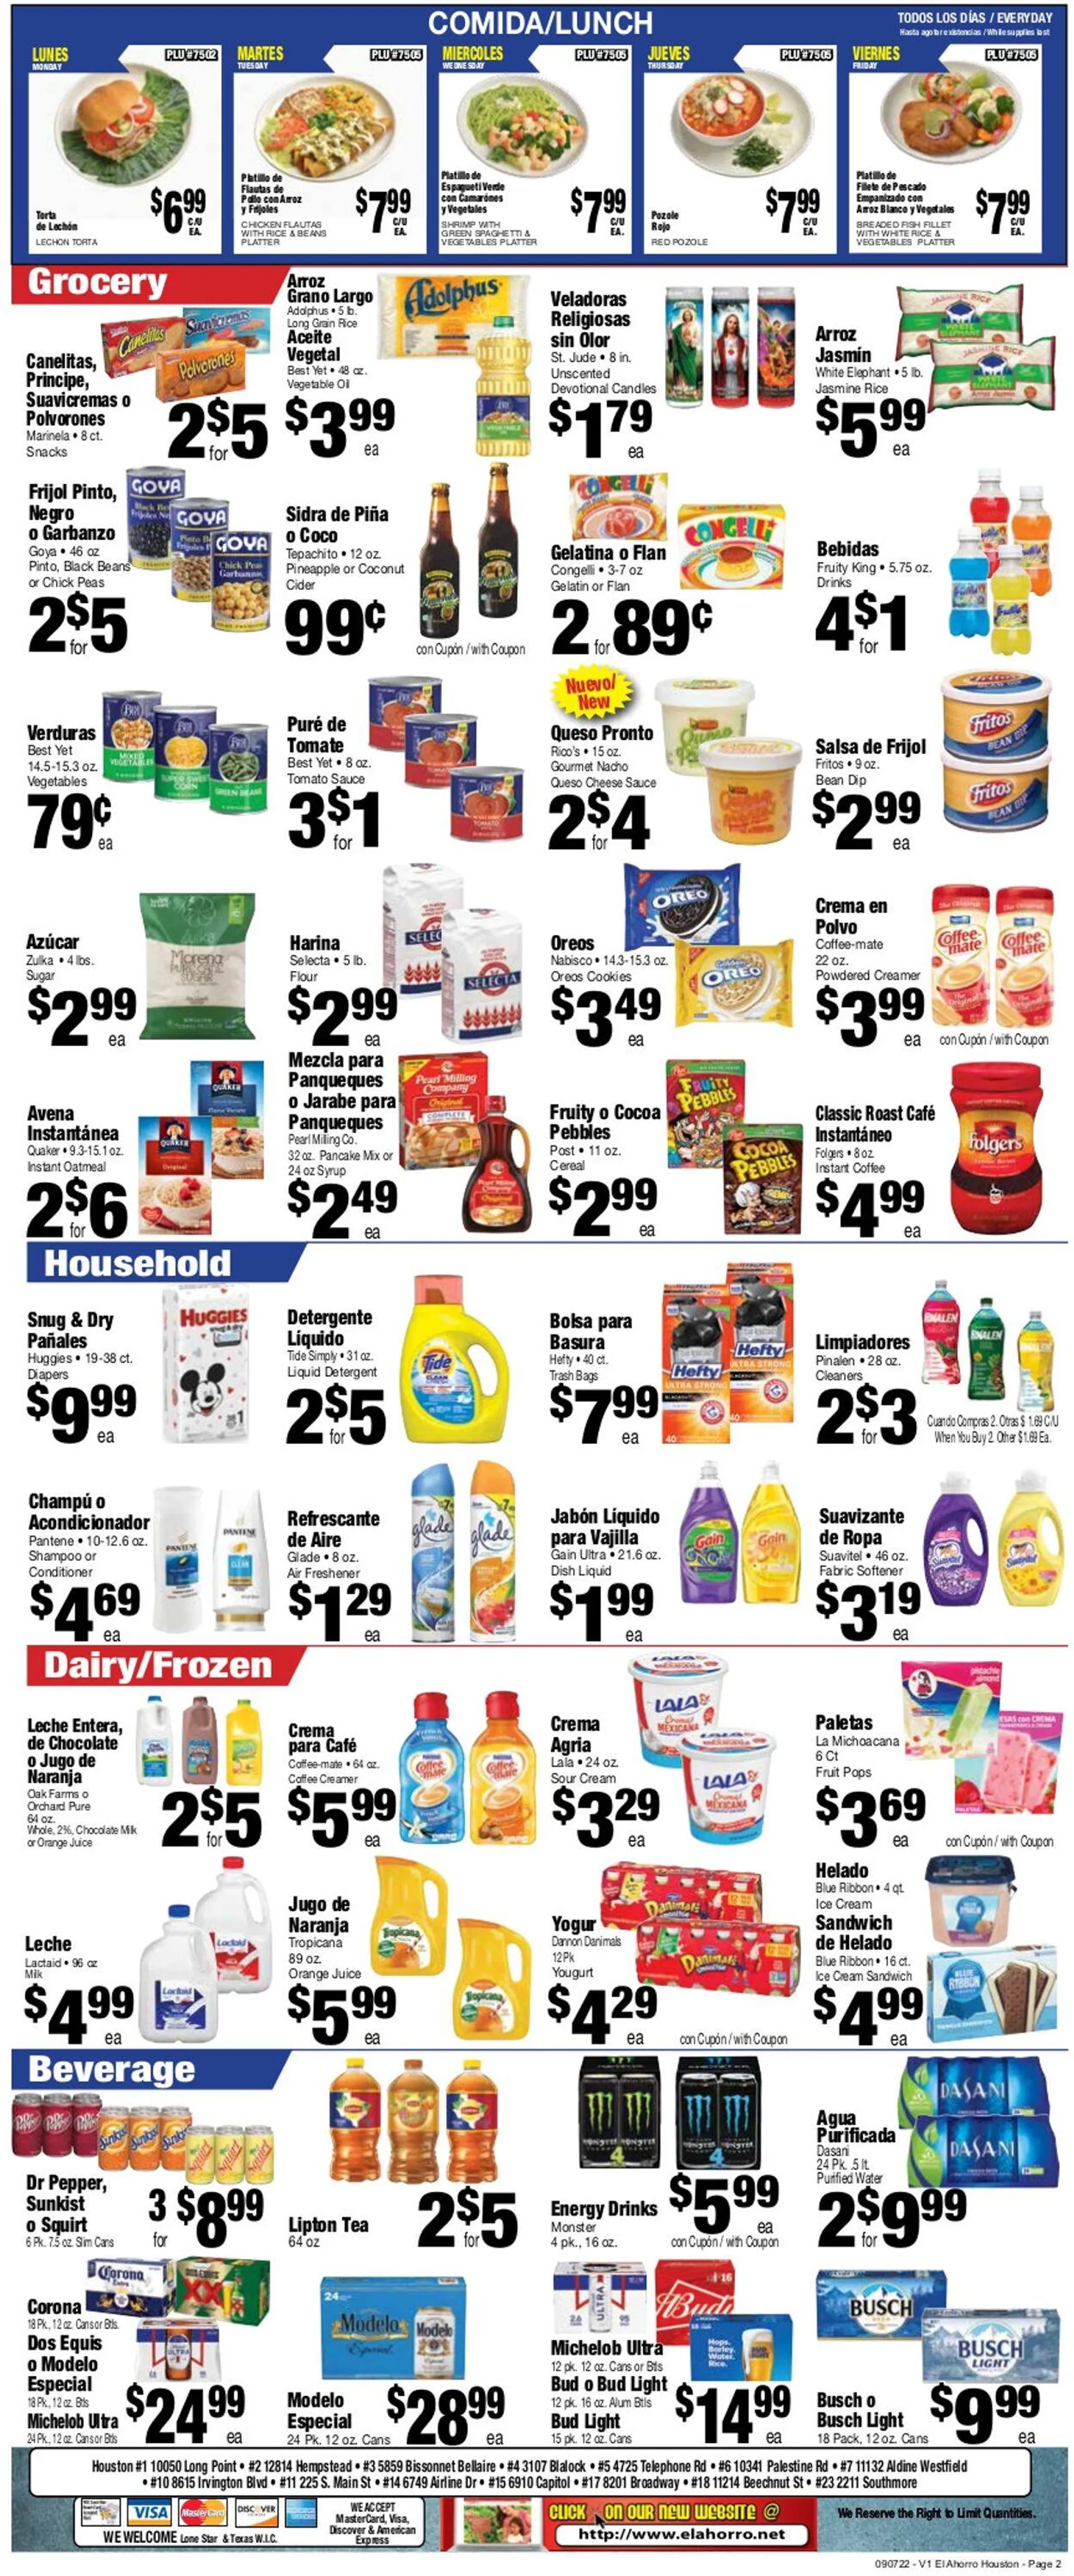 El Ahorro Supermarket Current weekly ad - 2